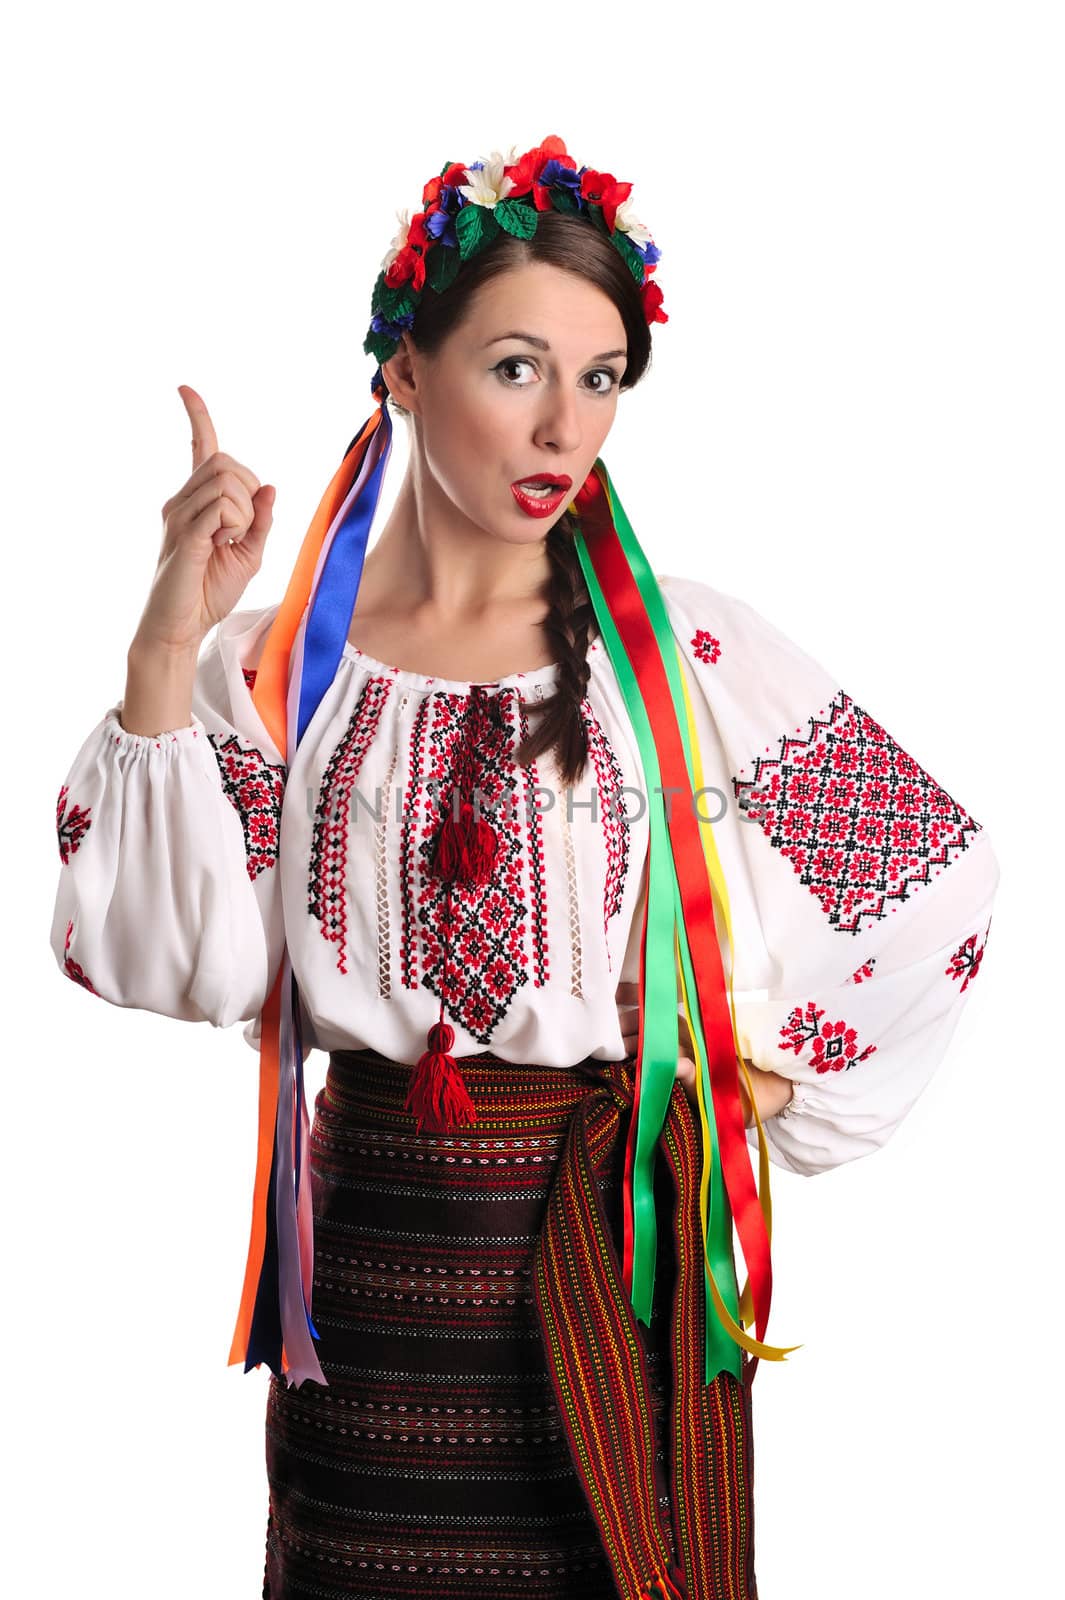 Portrait of joyful young Ukrainian woman in national costume. Isolated on white background